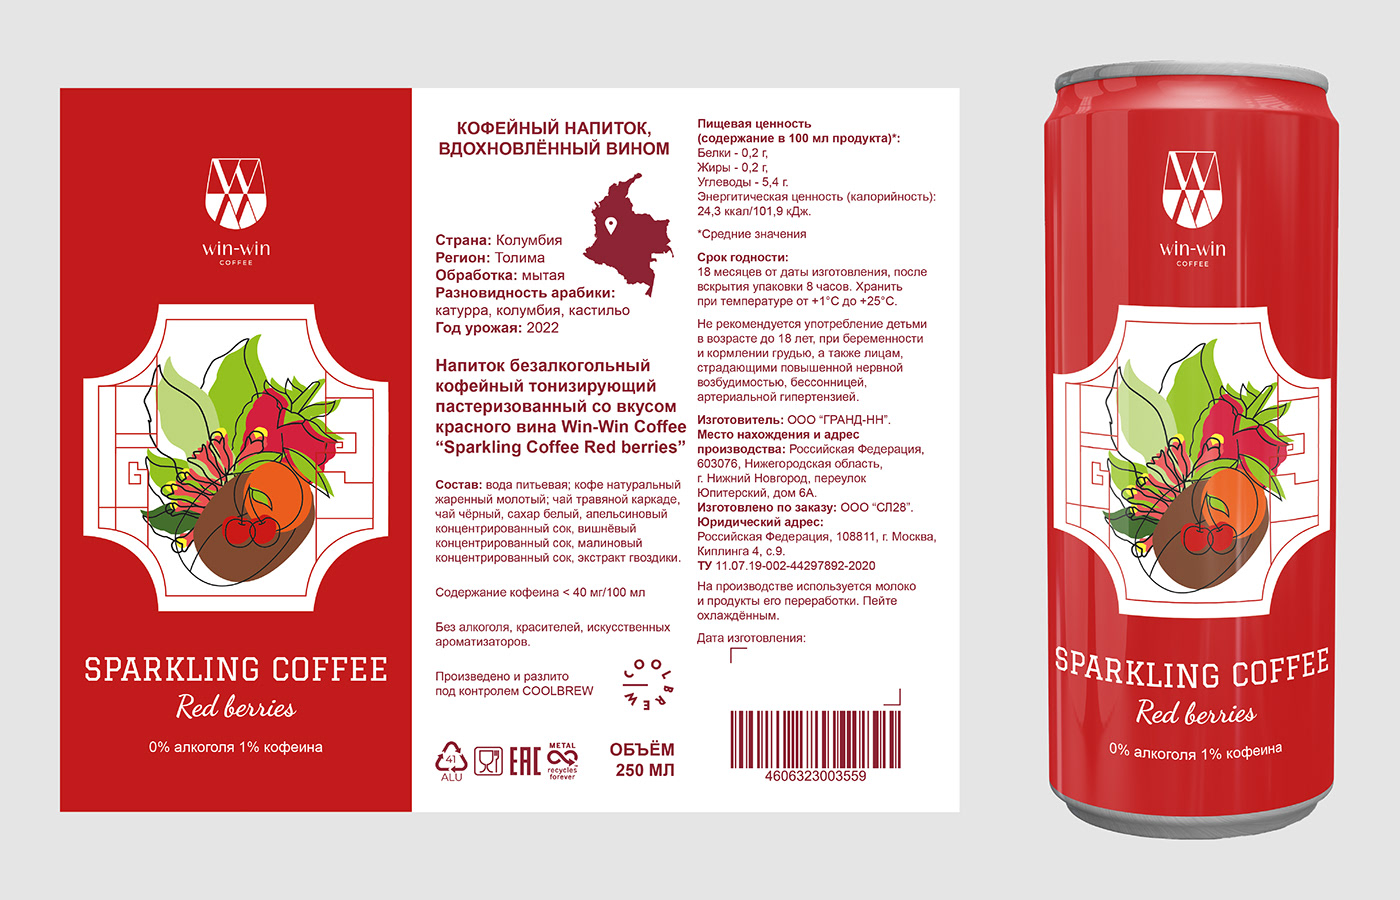 win-win Coffee identity brand identity Packaging win-win coffee wine дизайн упаковки айдентика sparkling coffee